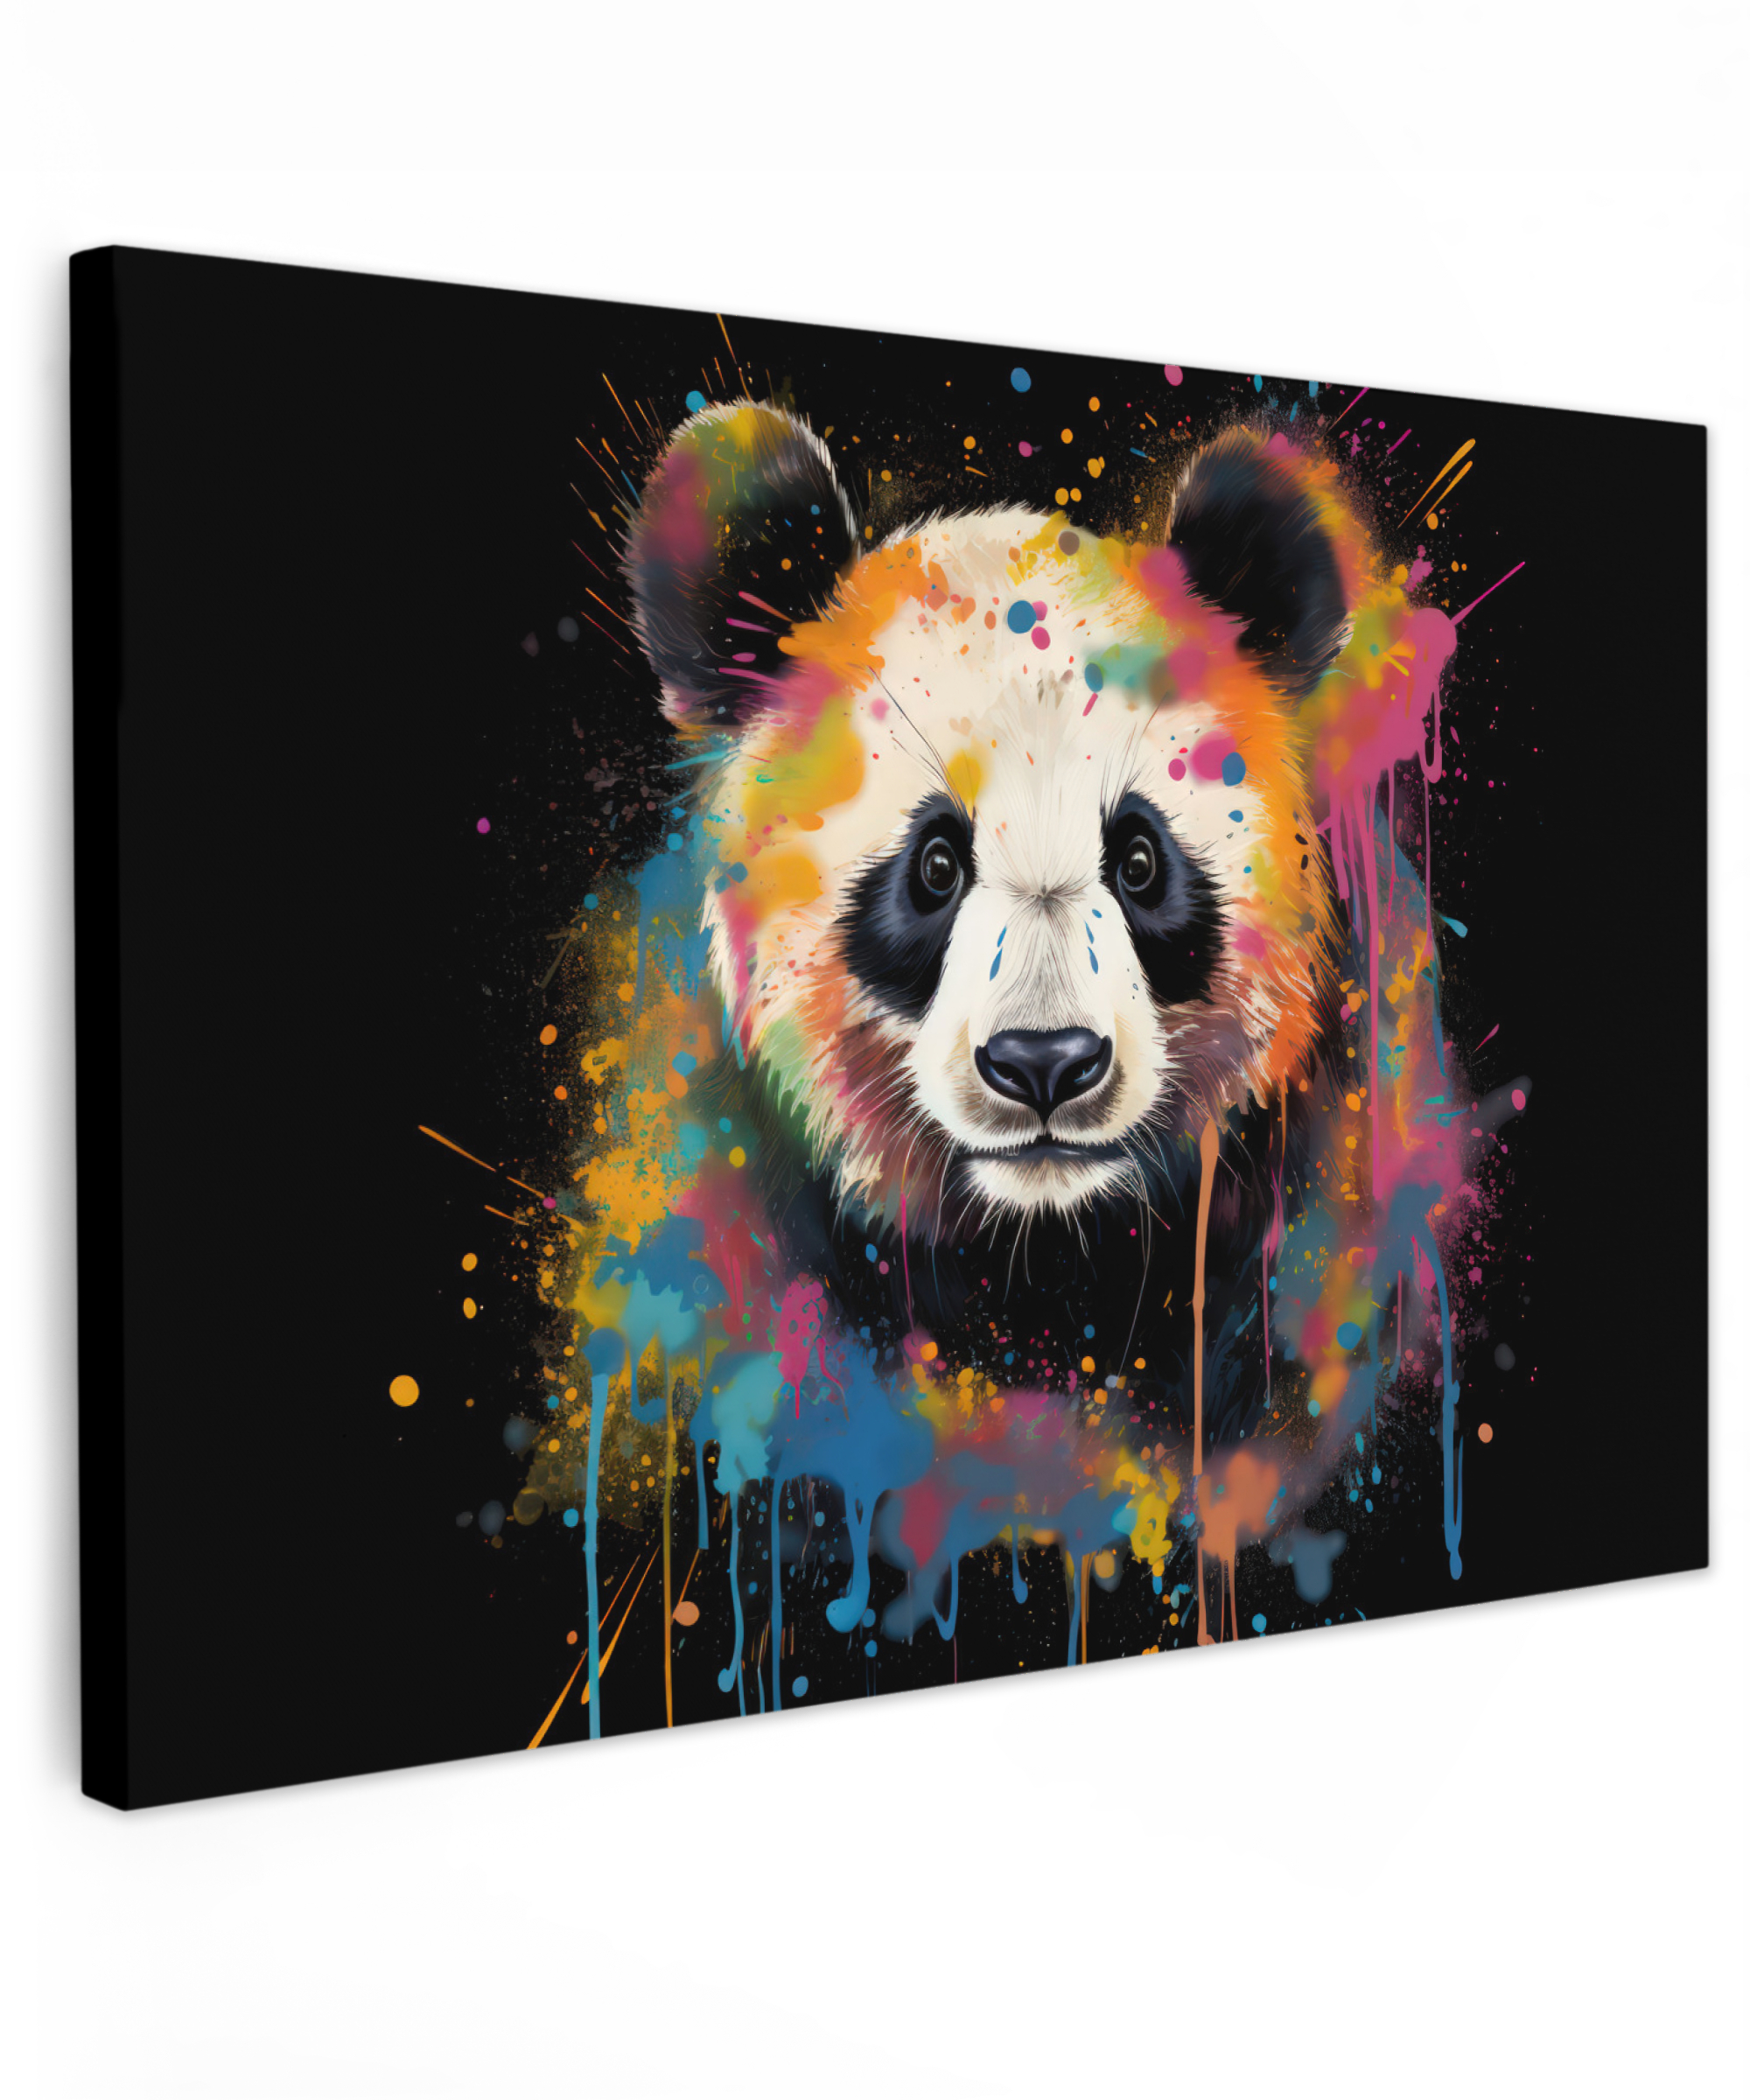 Canvas schilderij - Panda - Graffiti - Dieren - Zwart - Kleuren